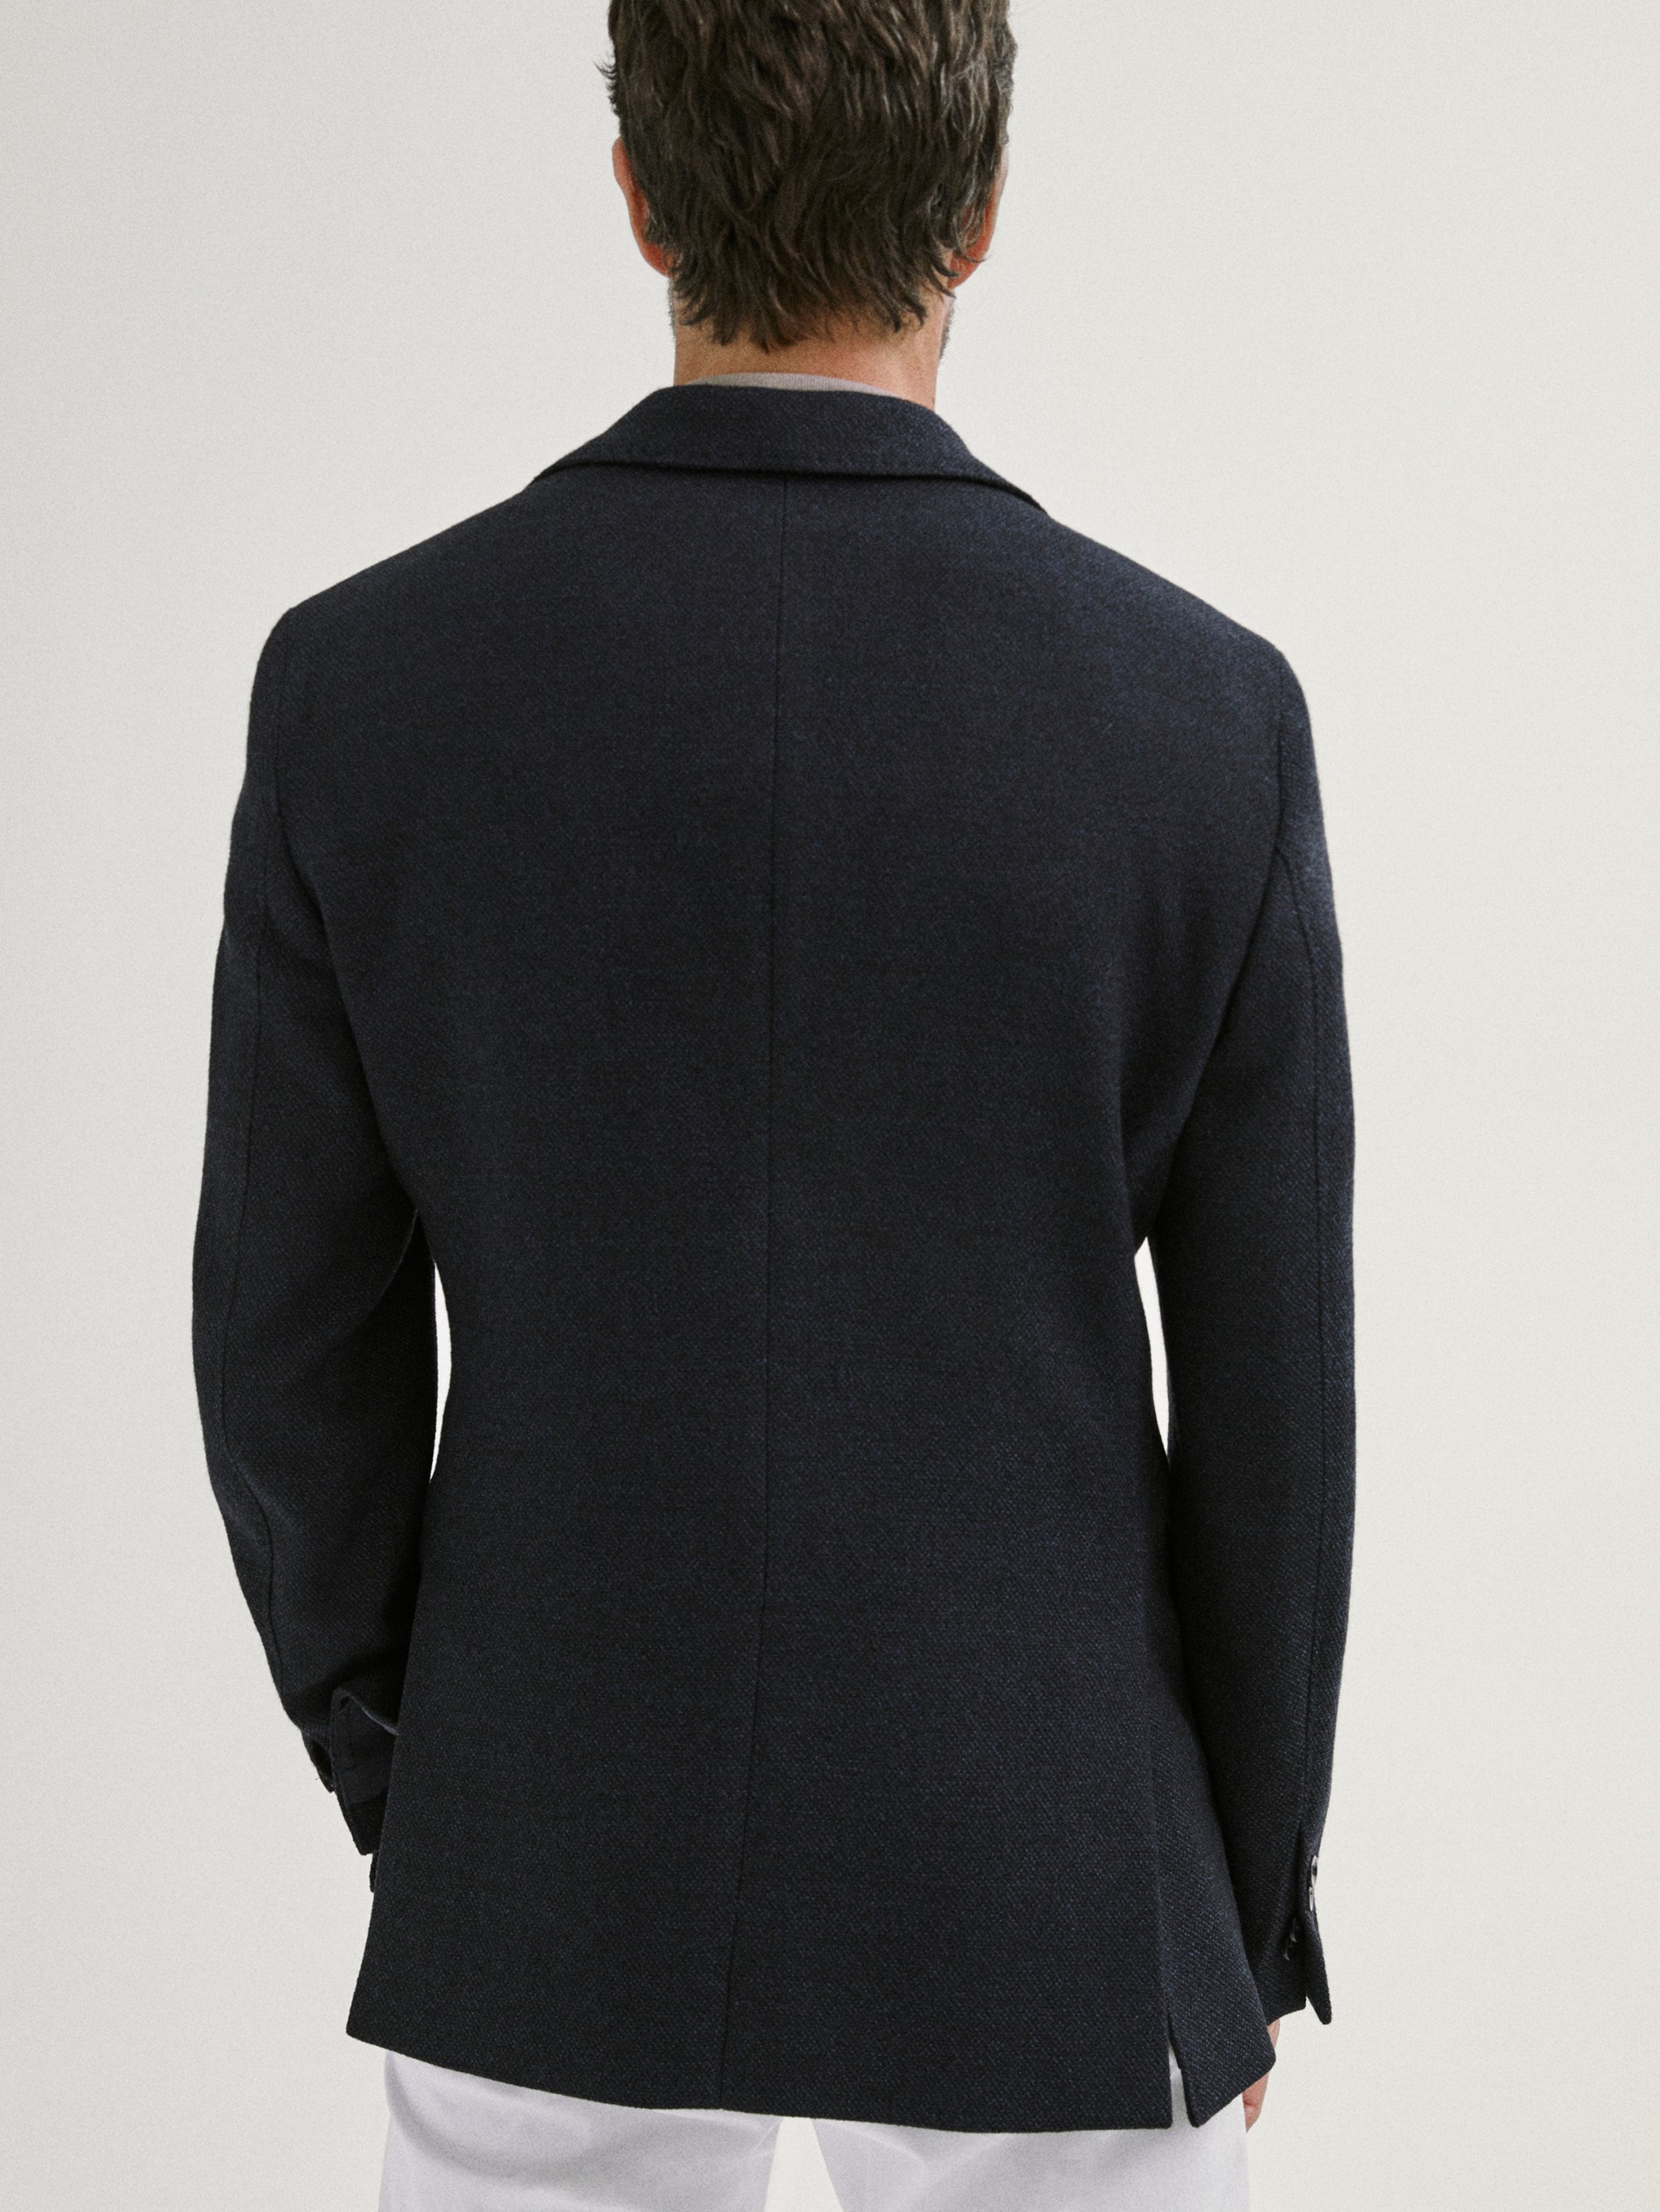 Massimo Dutti Slim Fit Textured Navy Blue Wool Blazer - Big Apple Buddy